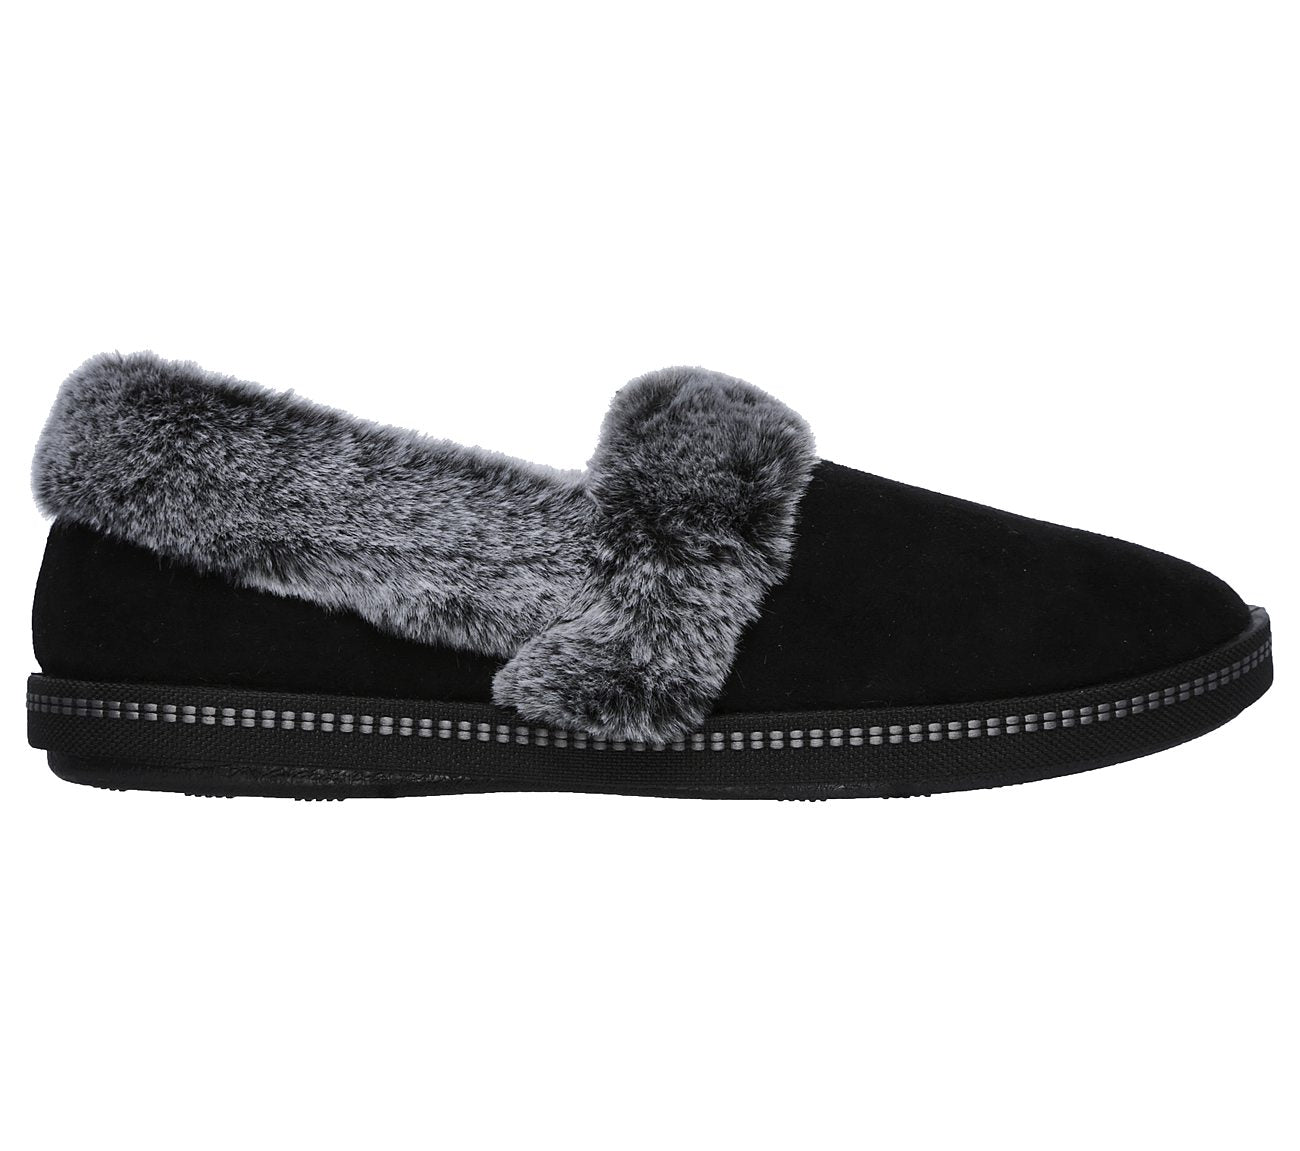 Skechers 32777 Team Toasty Black Ladies Black Slippers - elevate your sole